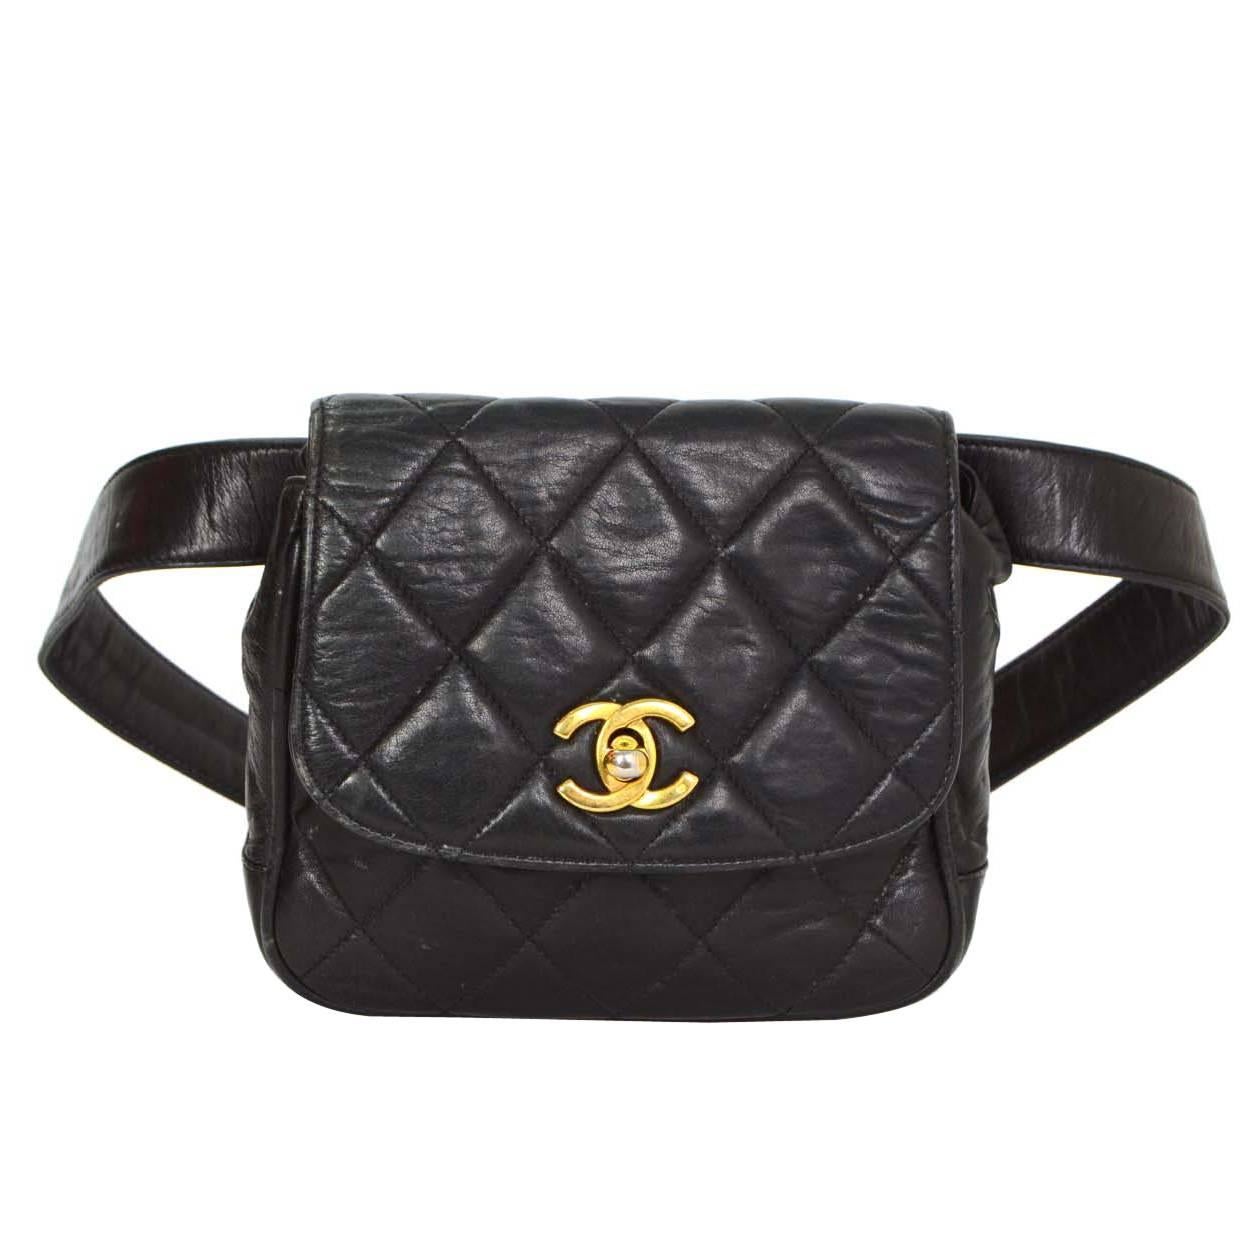 Chanel Black Quilted Flap Belt Bag sz 75 GHW